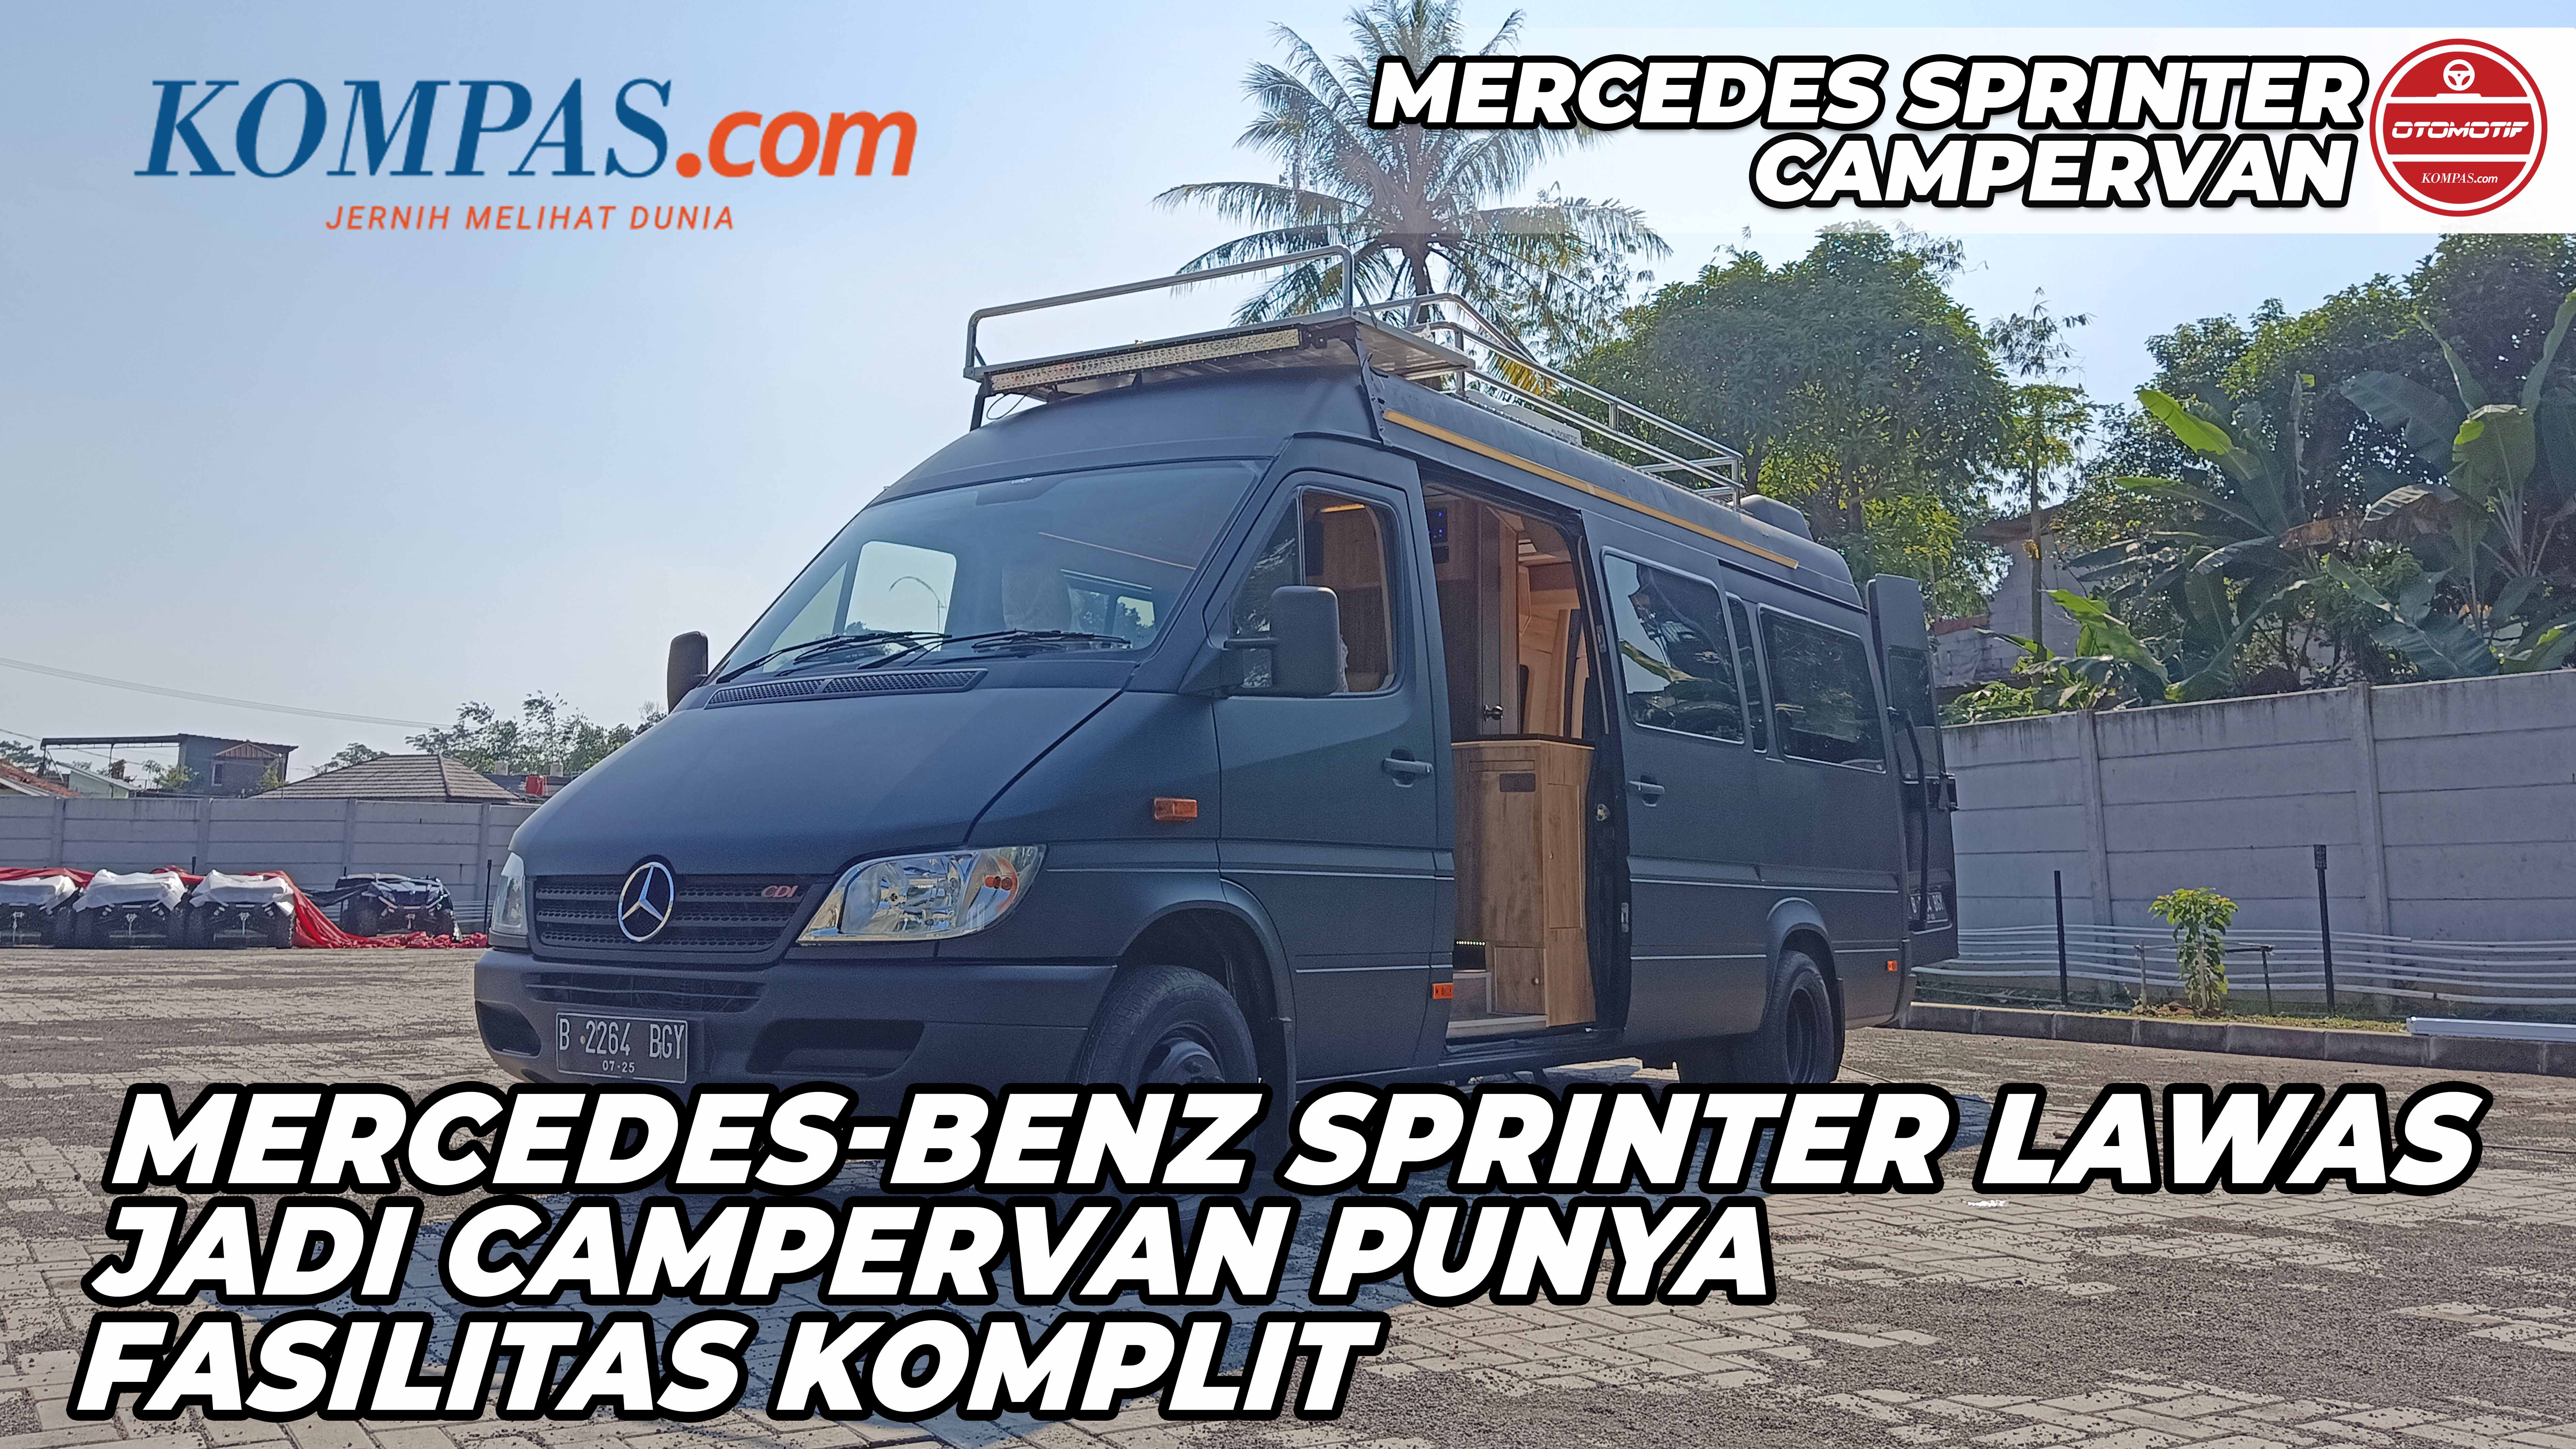 Review | Mercedes Benz Sprinter Campervan | Sprinter Lawas Jadi Campervan Punya Fasilitas Komplit